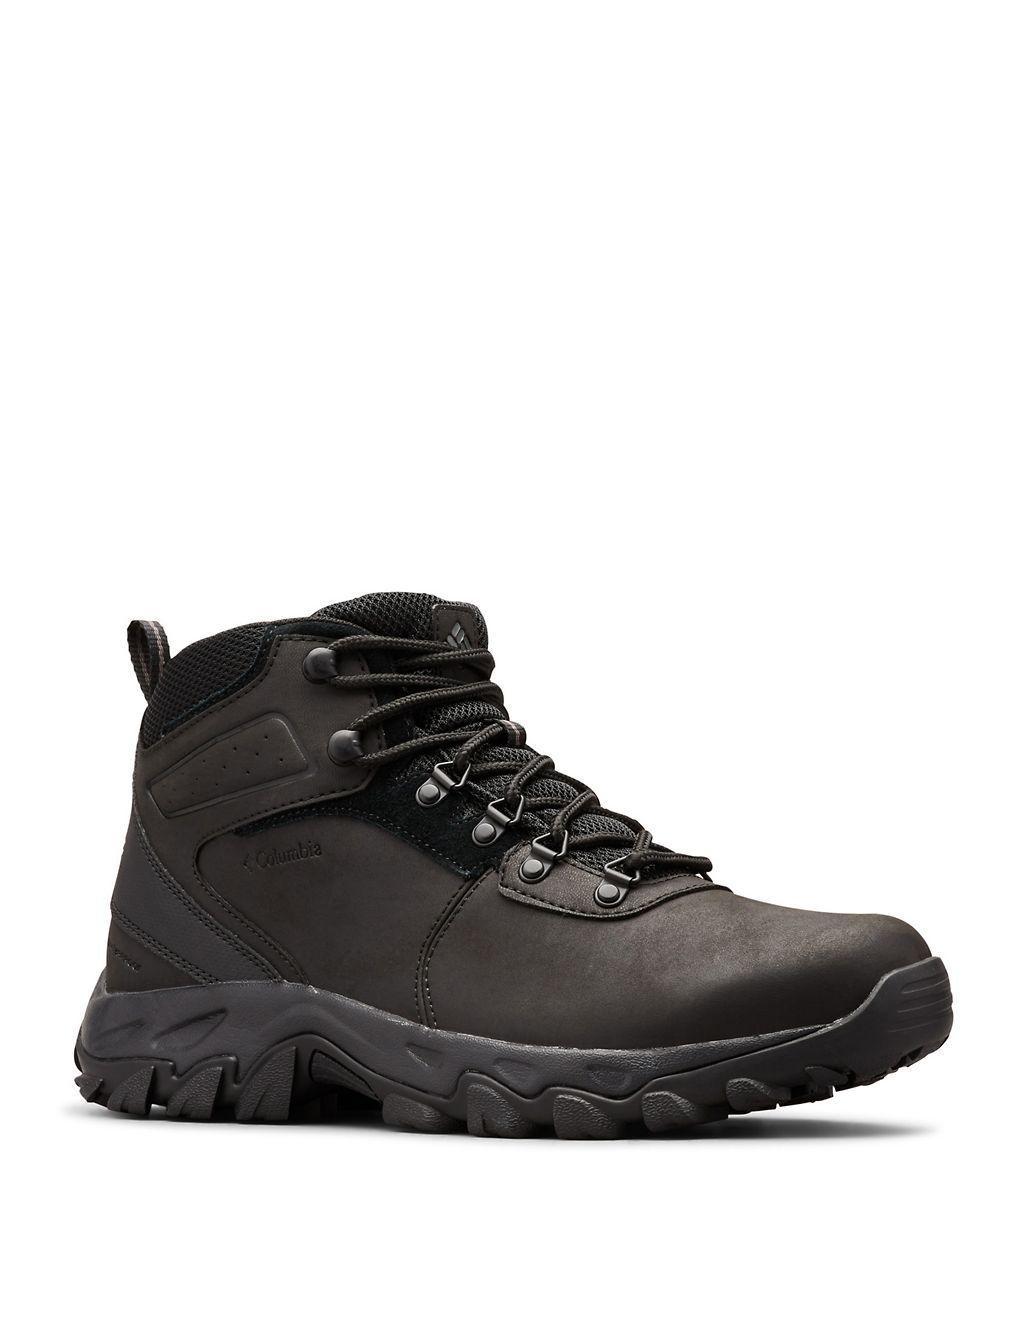 Newton Ridge Plus II Waterproof Walking Boots | Columbia | M&S